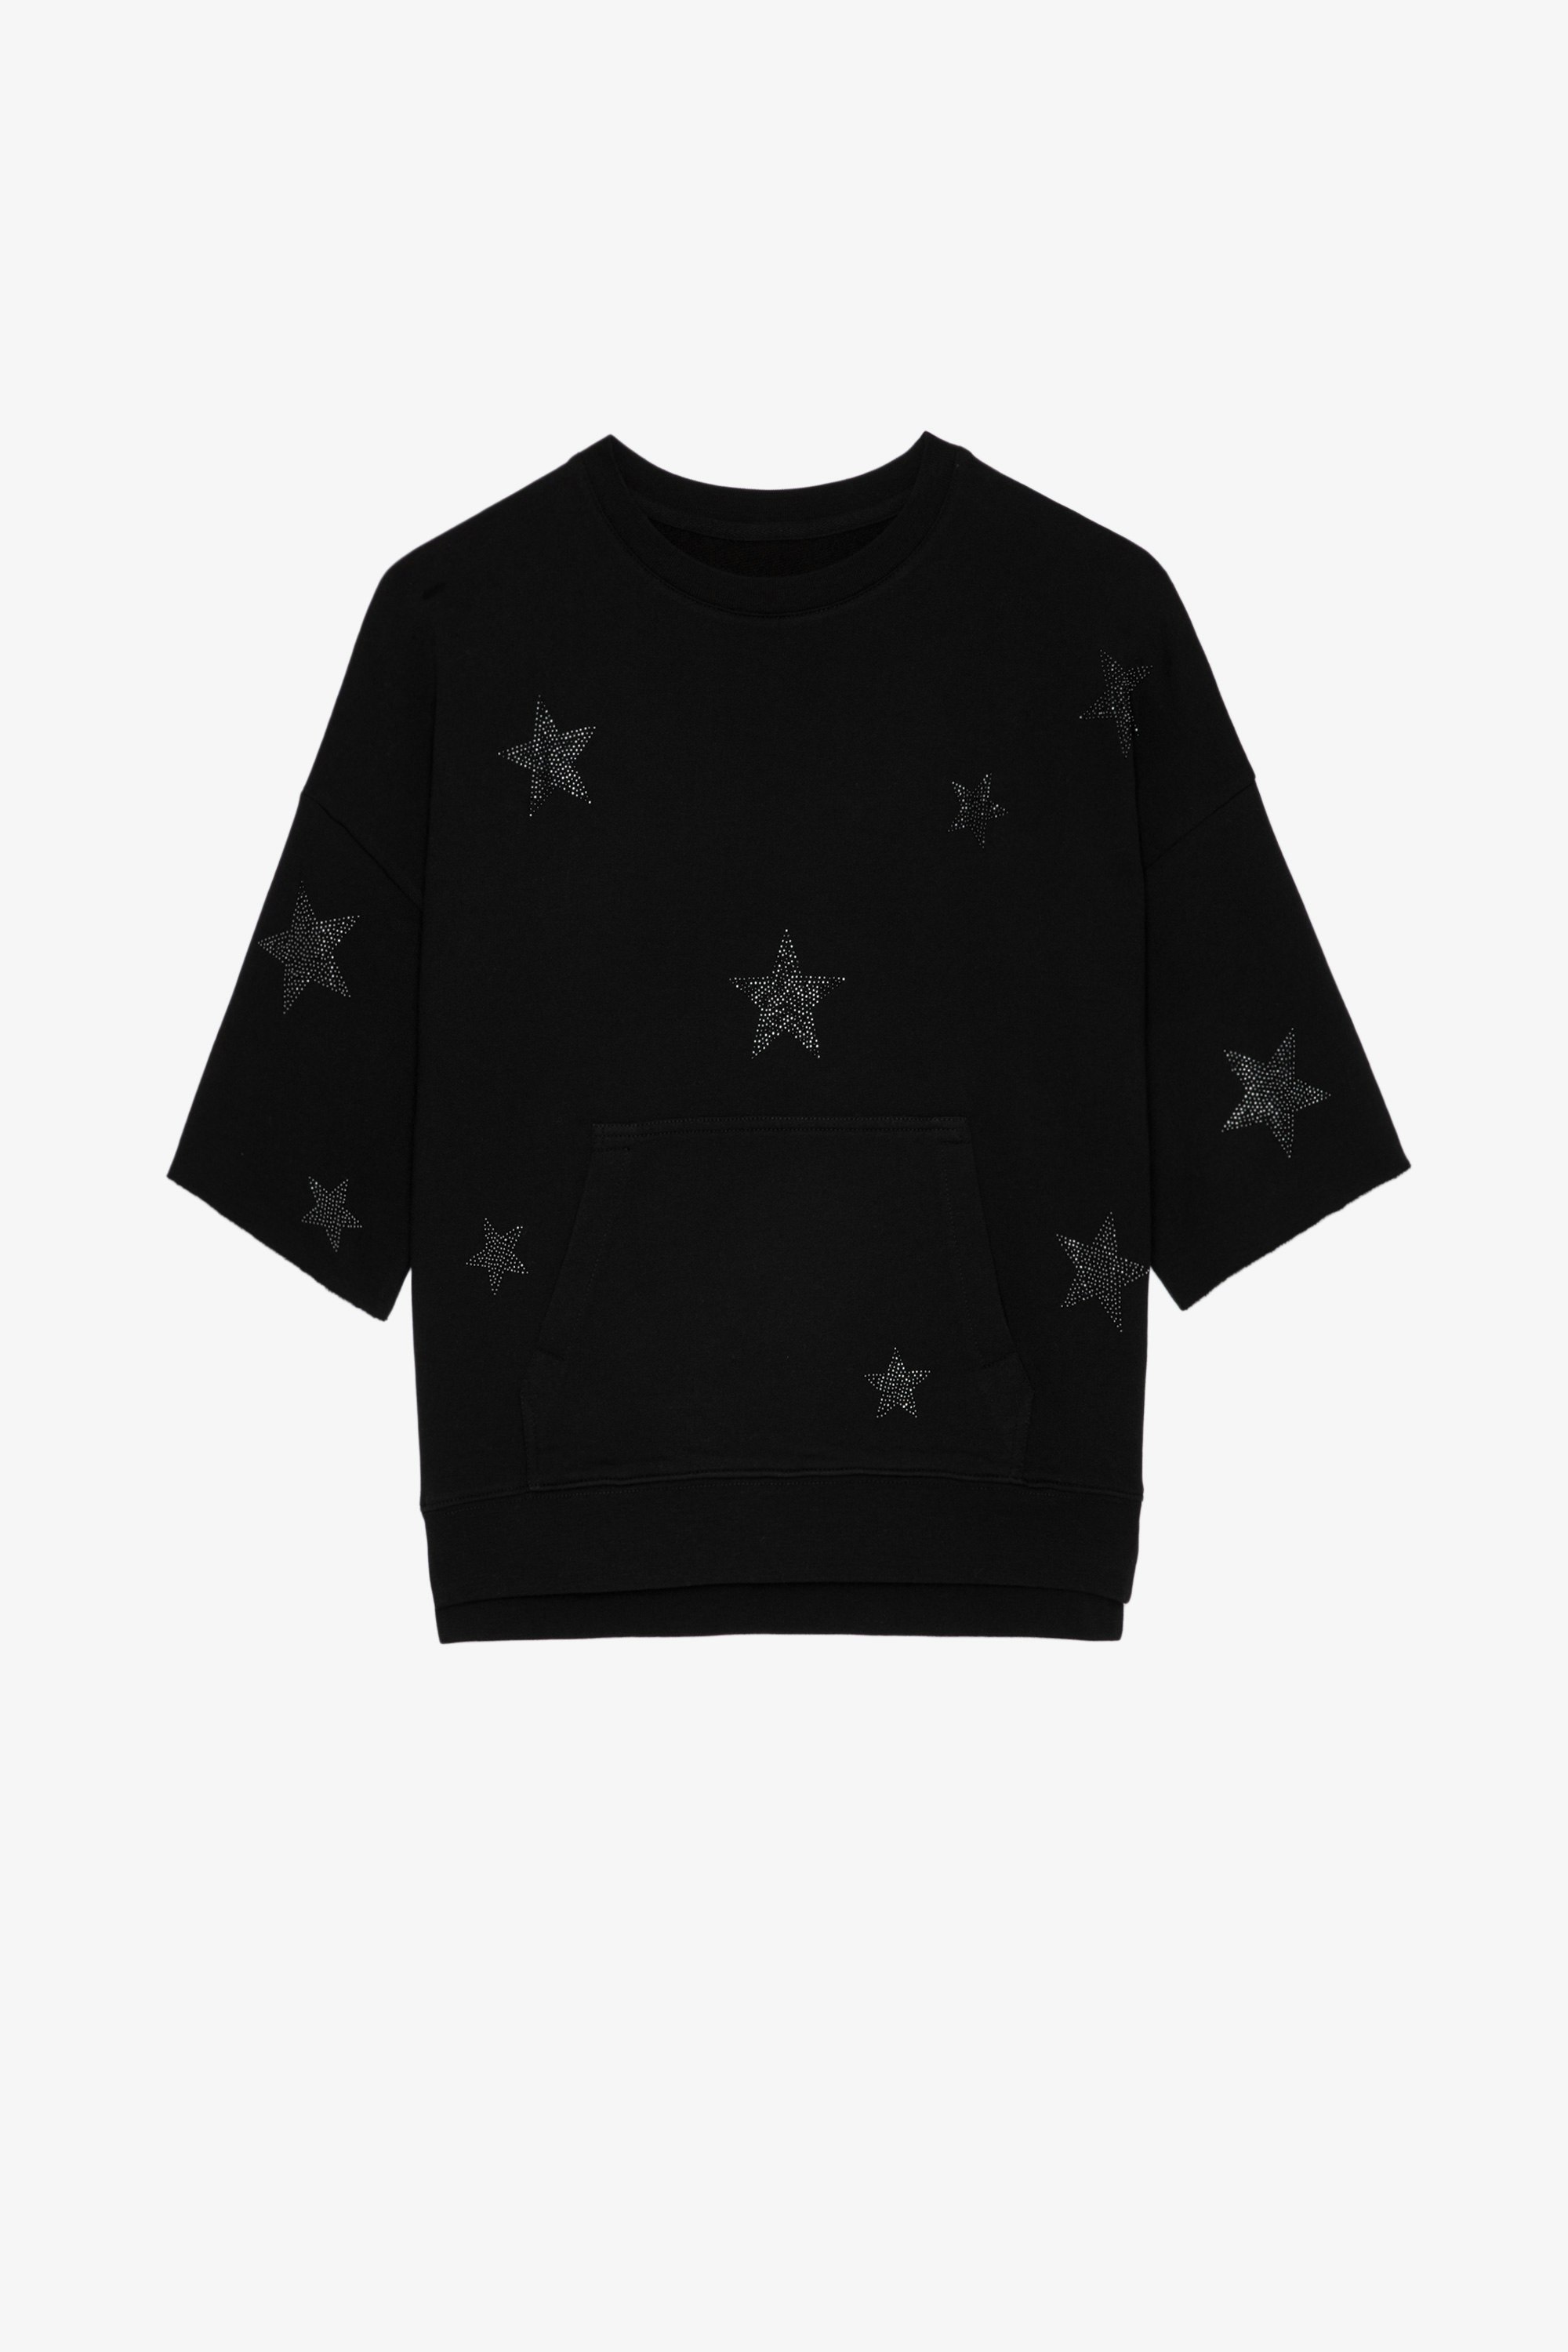 Kaly Stars Strass Sweatshirt Women's cotton sweatshirt with crystal-embellished stars